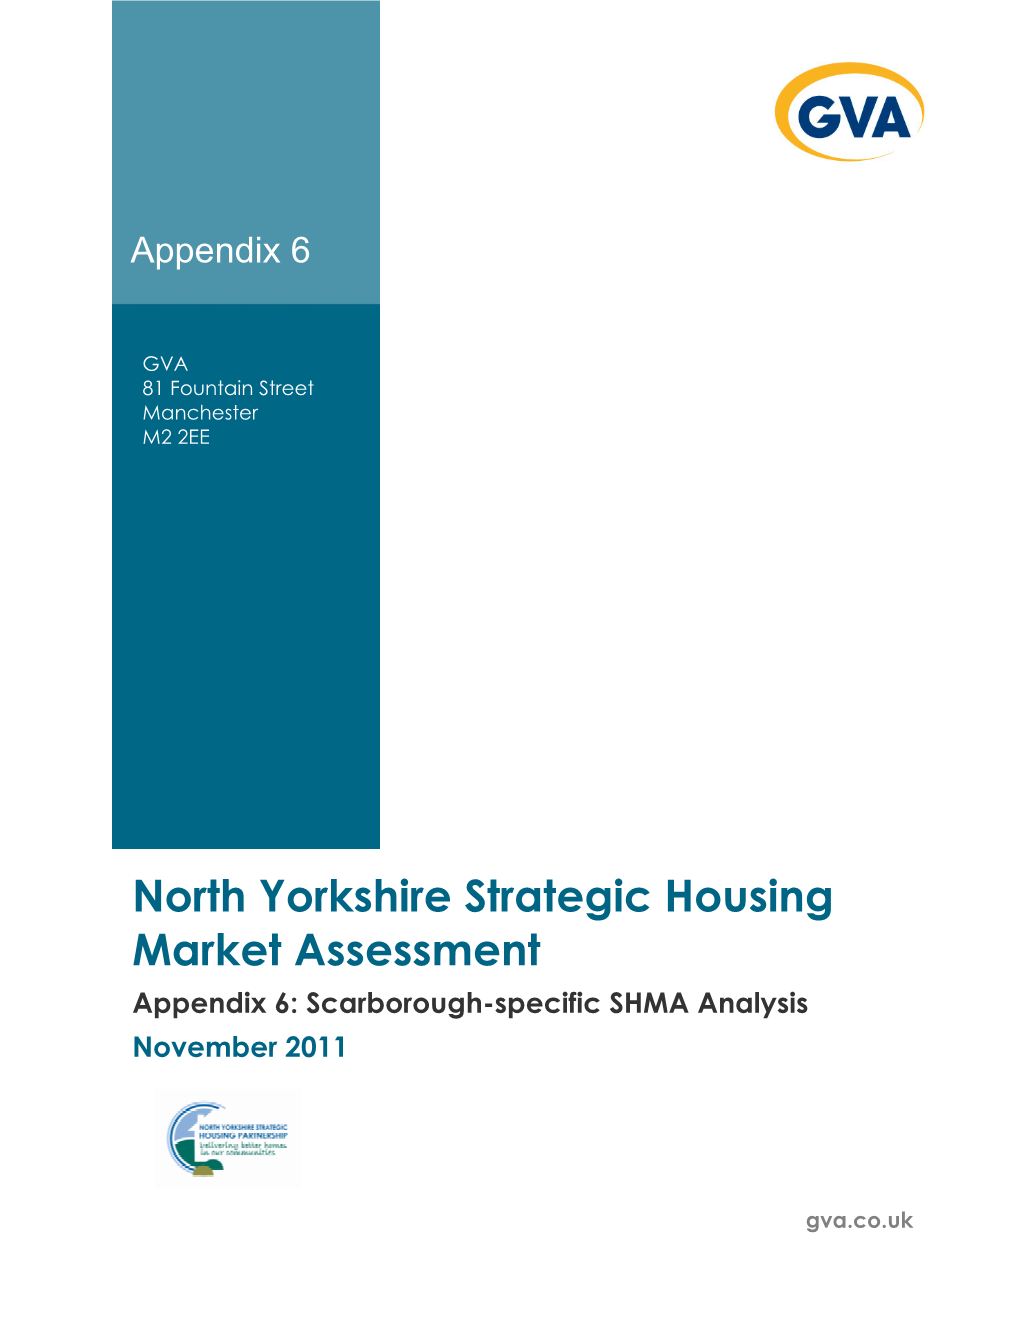 North Yorkshire Strategic Housing Market Assessment Appendix 6: Scarborough-Specific SHMA Analysis November 2011